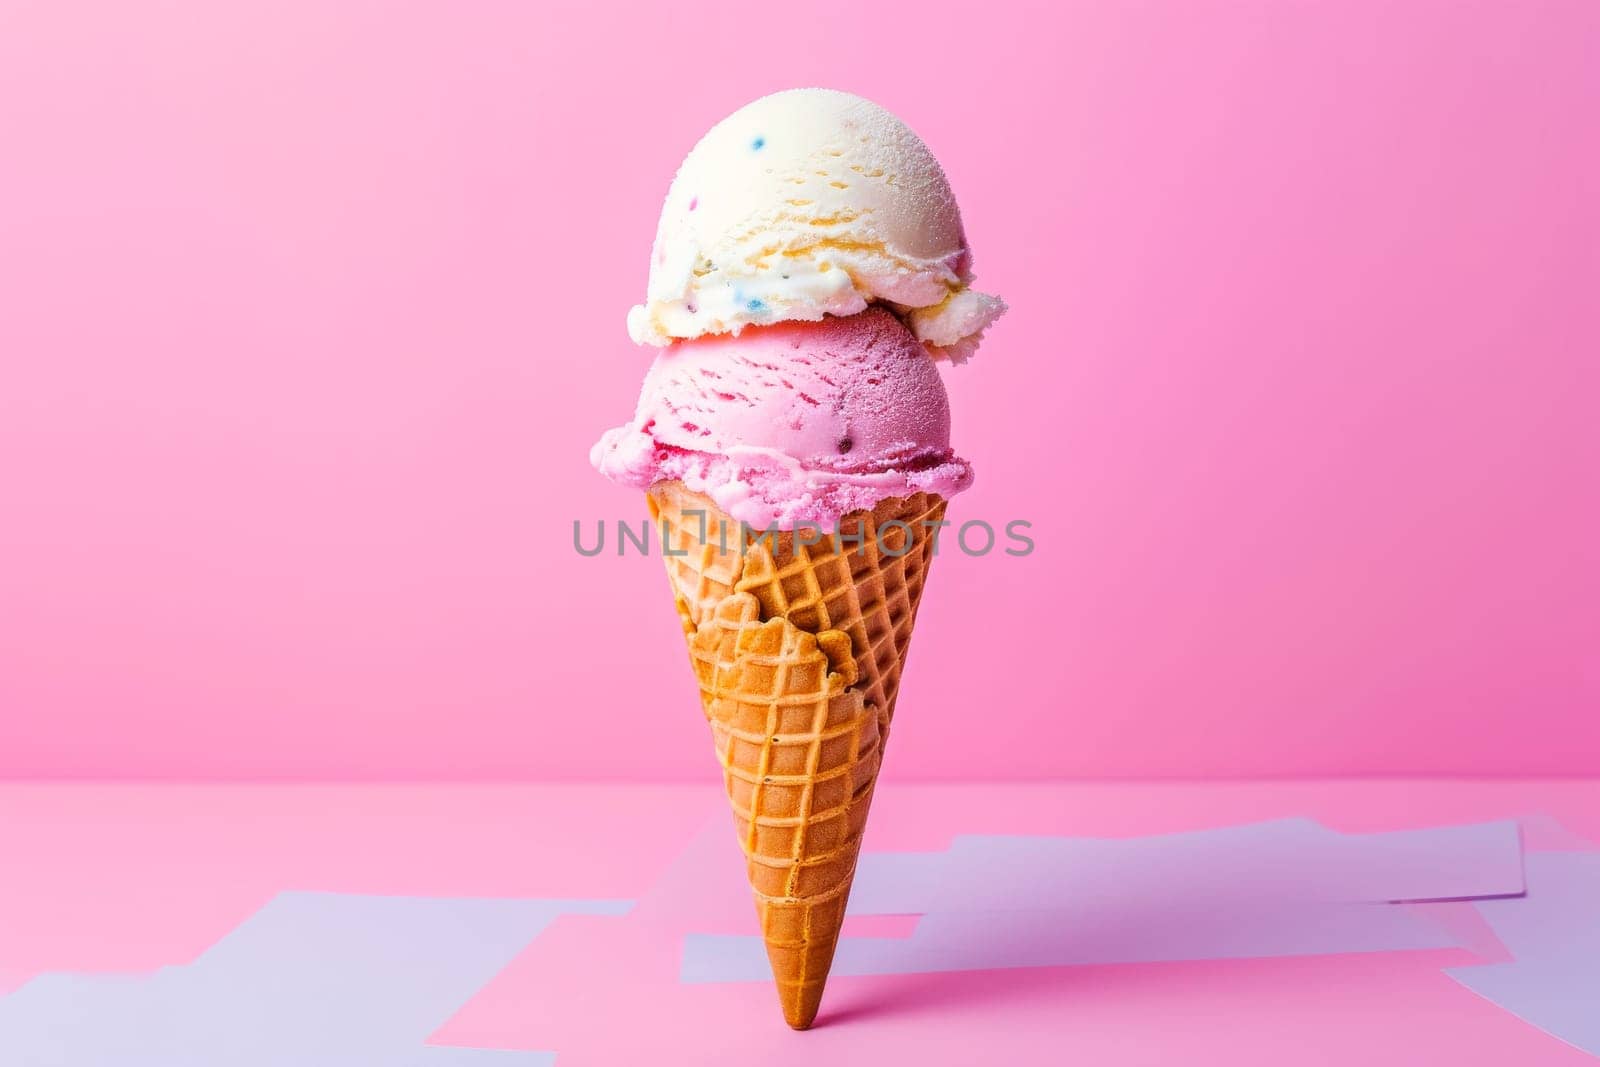 Ice Cream Cone on Pink Background by vladimka